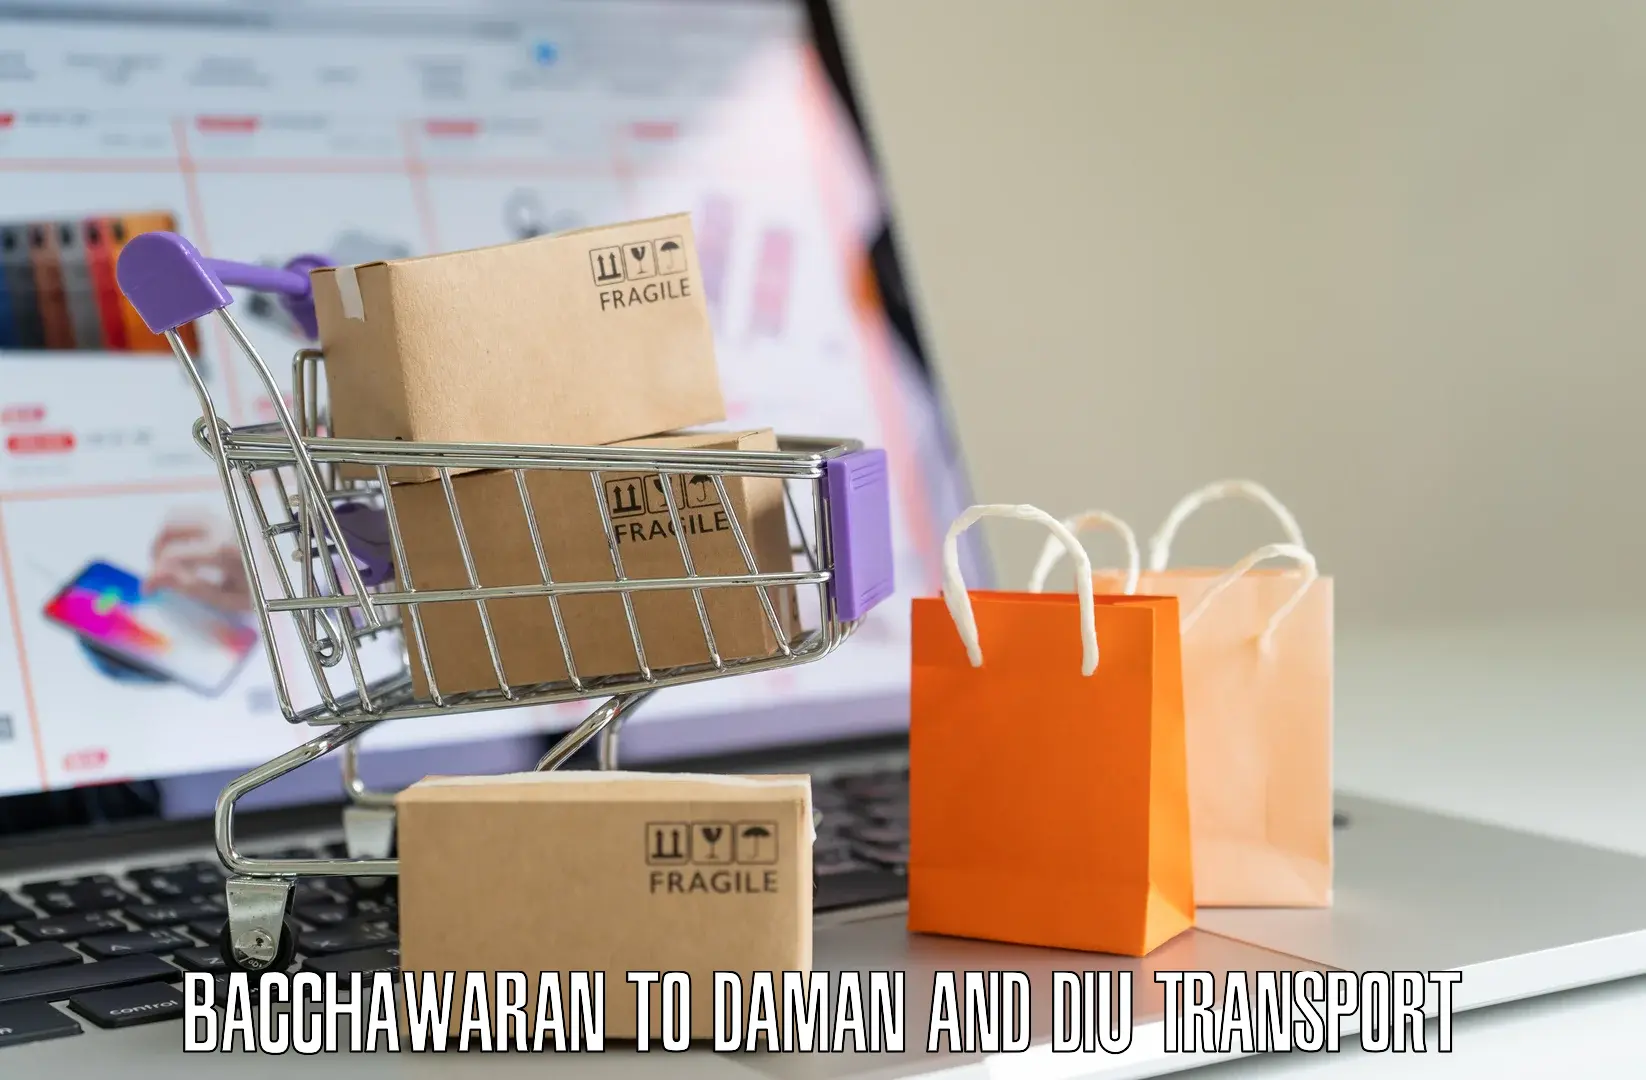 Vehicle transport services Bacchawaran to Daman and Diu